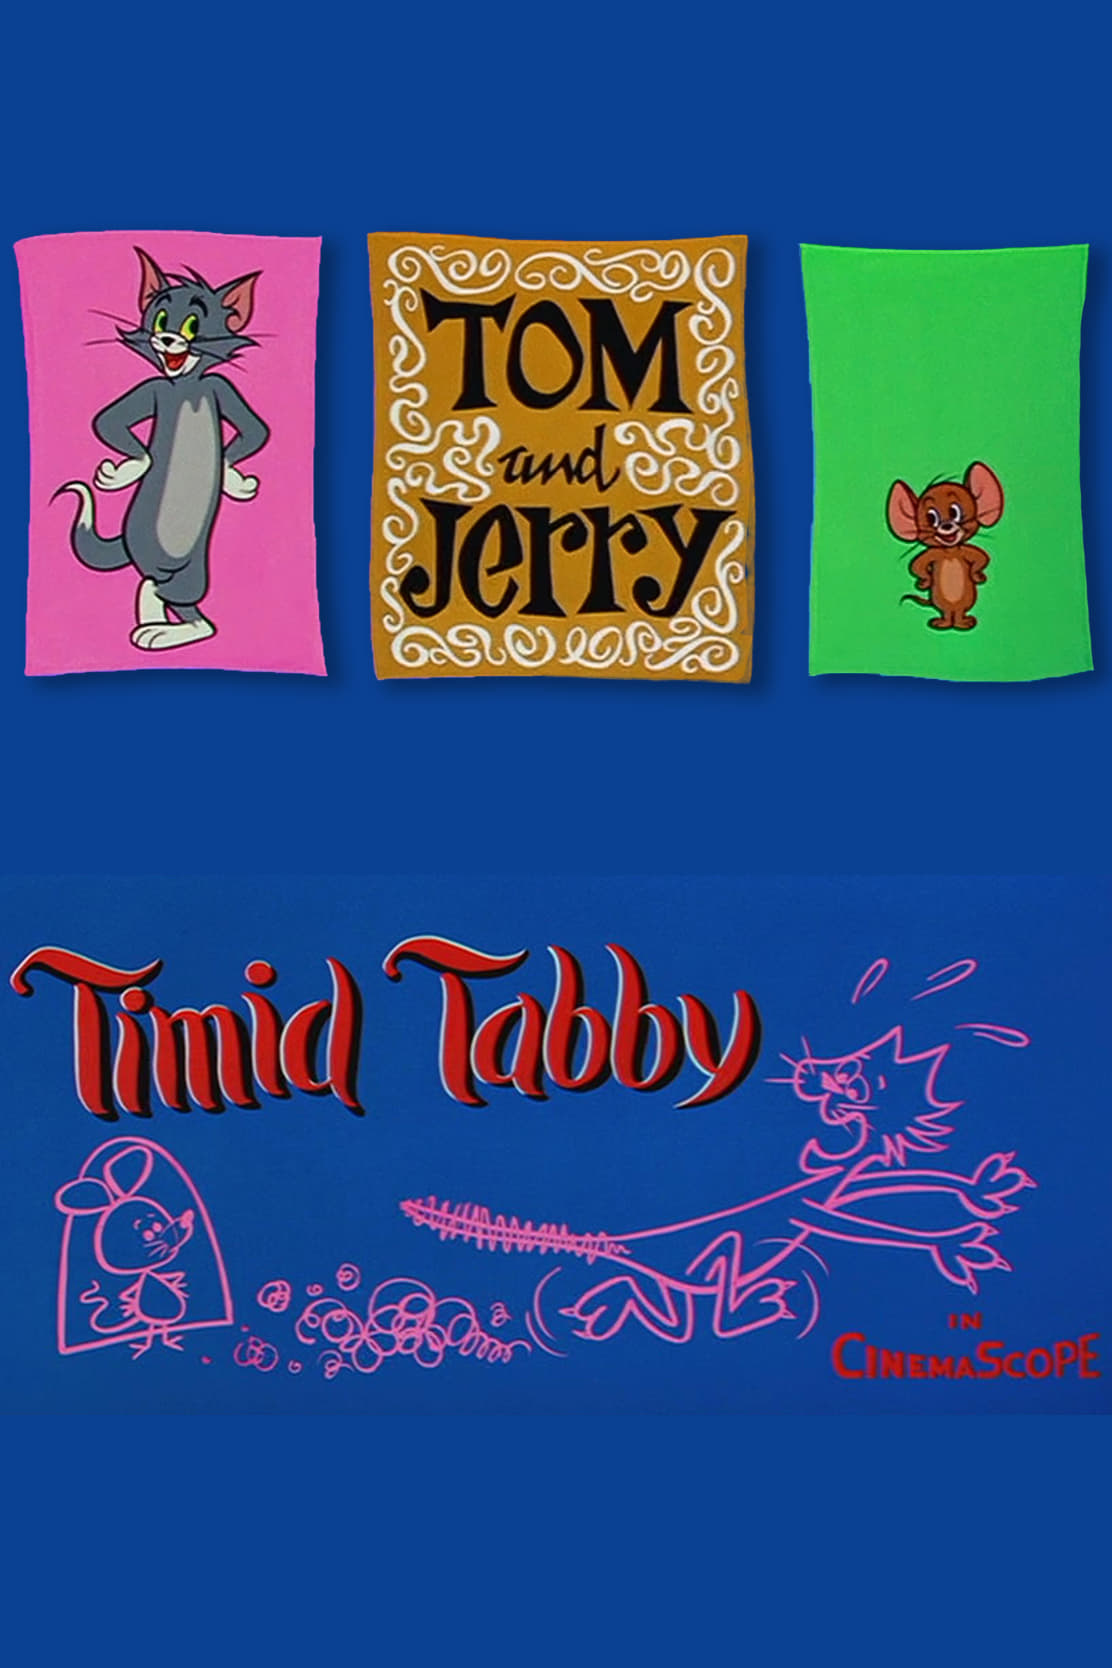 Timid Tabby (1957)